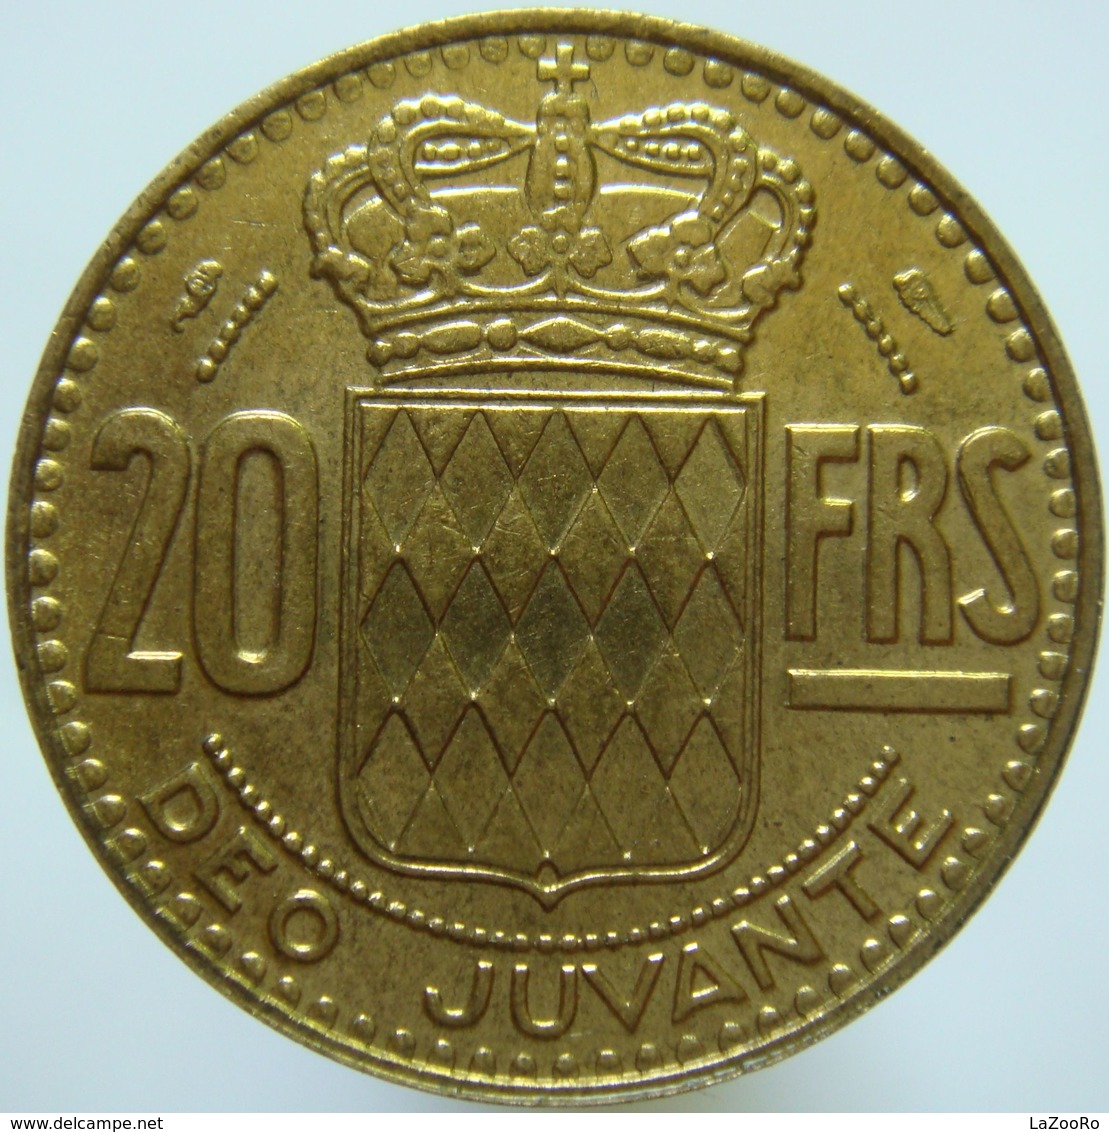 LaZooRo: Monaco 20 Francs 1951 UNC - 1949-1956 Old Francs